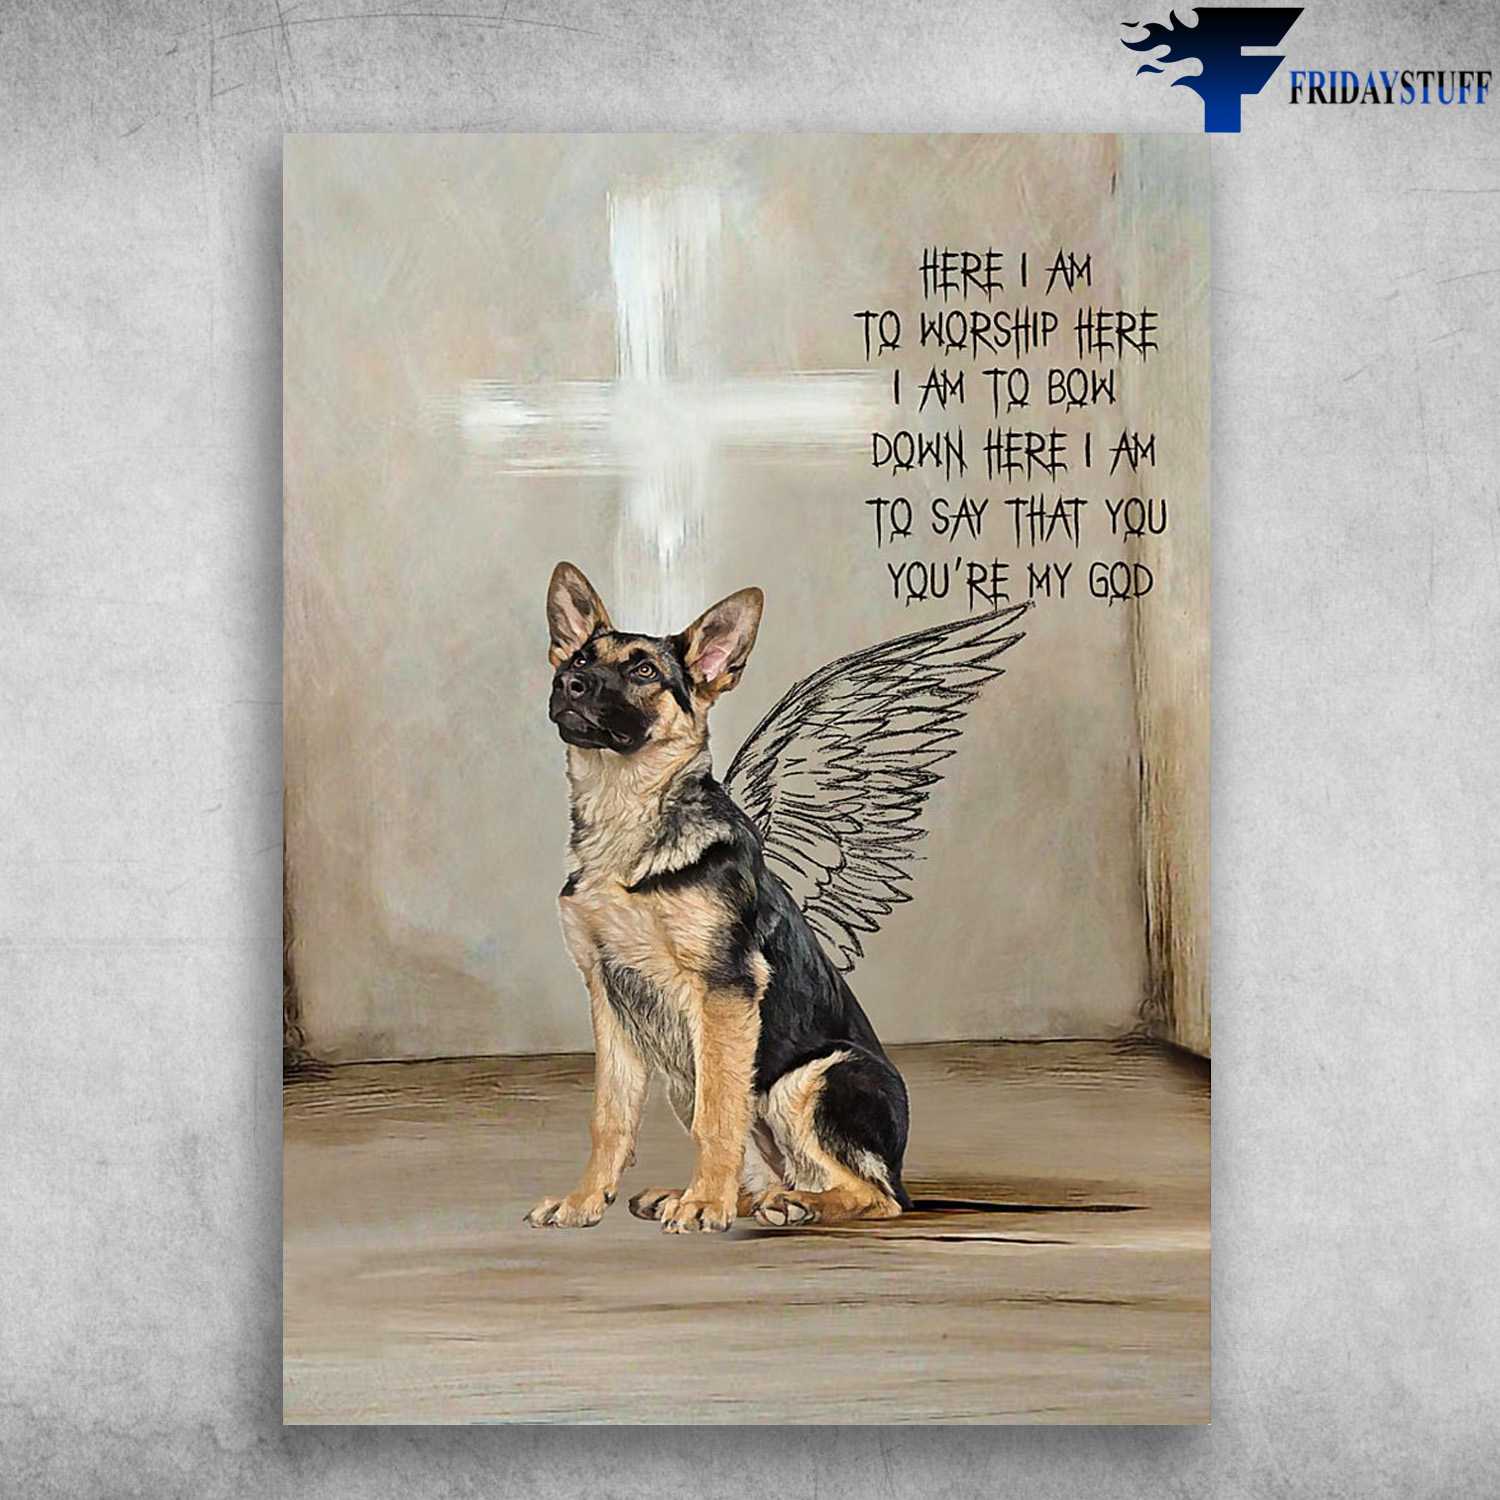 German Shepherd Angel - Here I Am To Worship Here, I Am To Bow Down Here I Am, To Say That You, You're My God